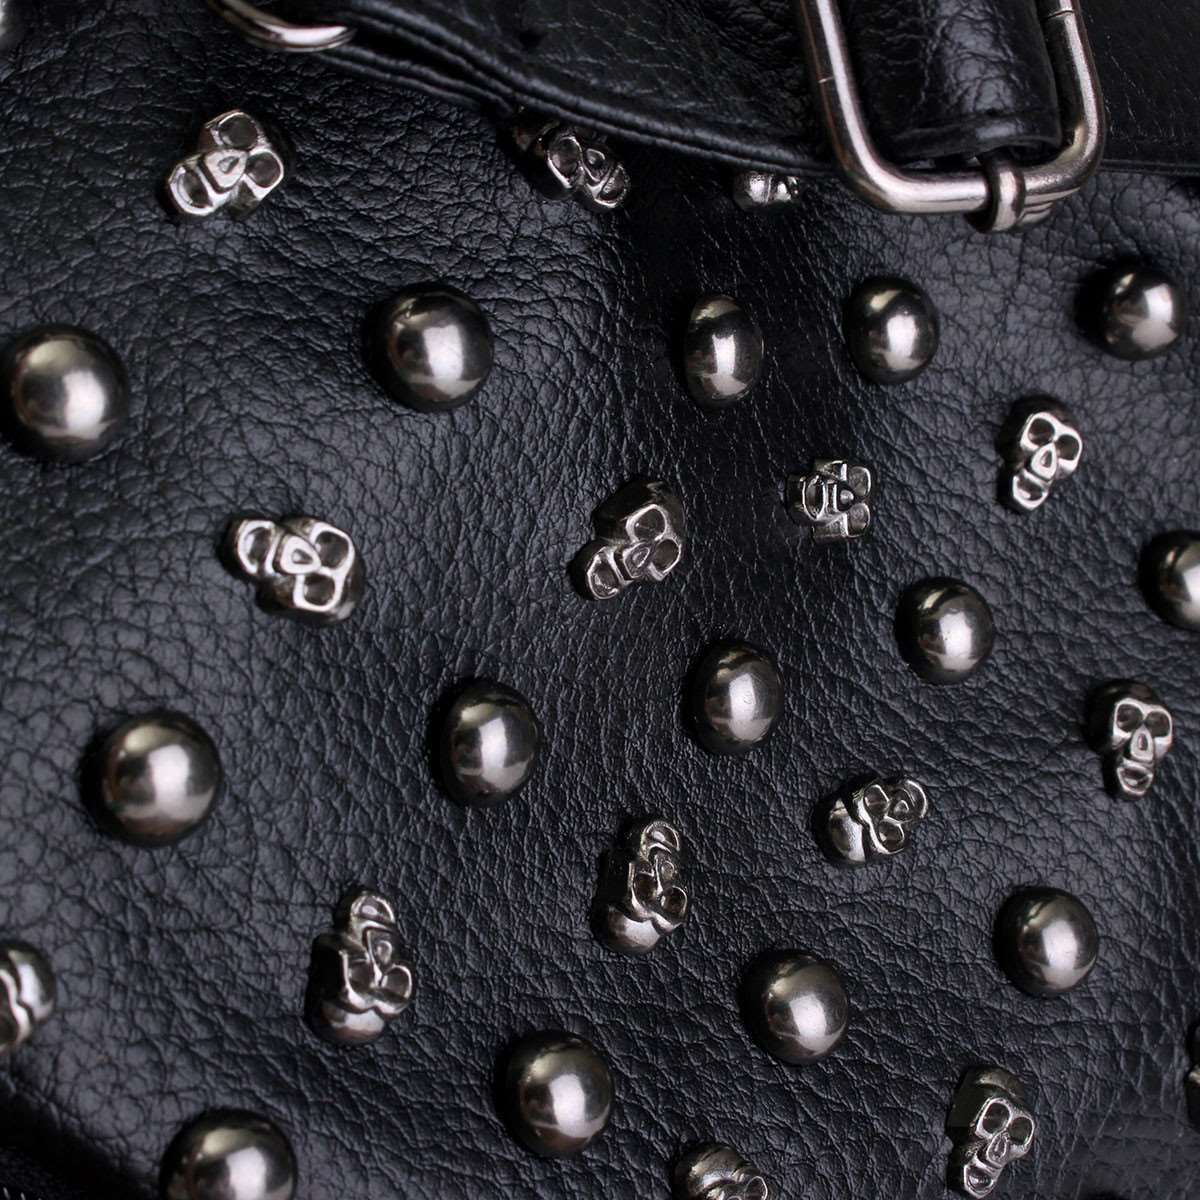 Women Skull Bag Rivet Punk Shoulder Bags Studded Handbag Luxury Motorcycle Crossbody Bolsa Lady Vintage Black Bags Satchel Woman